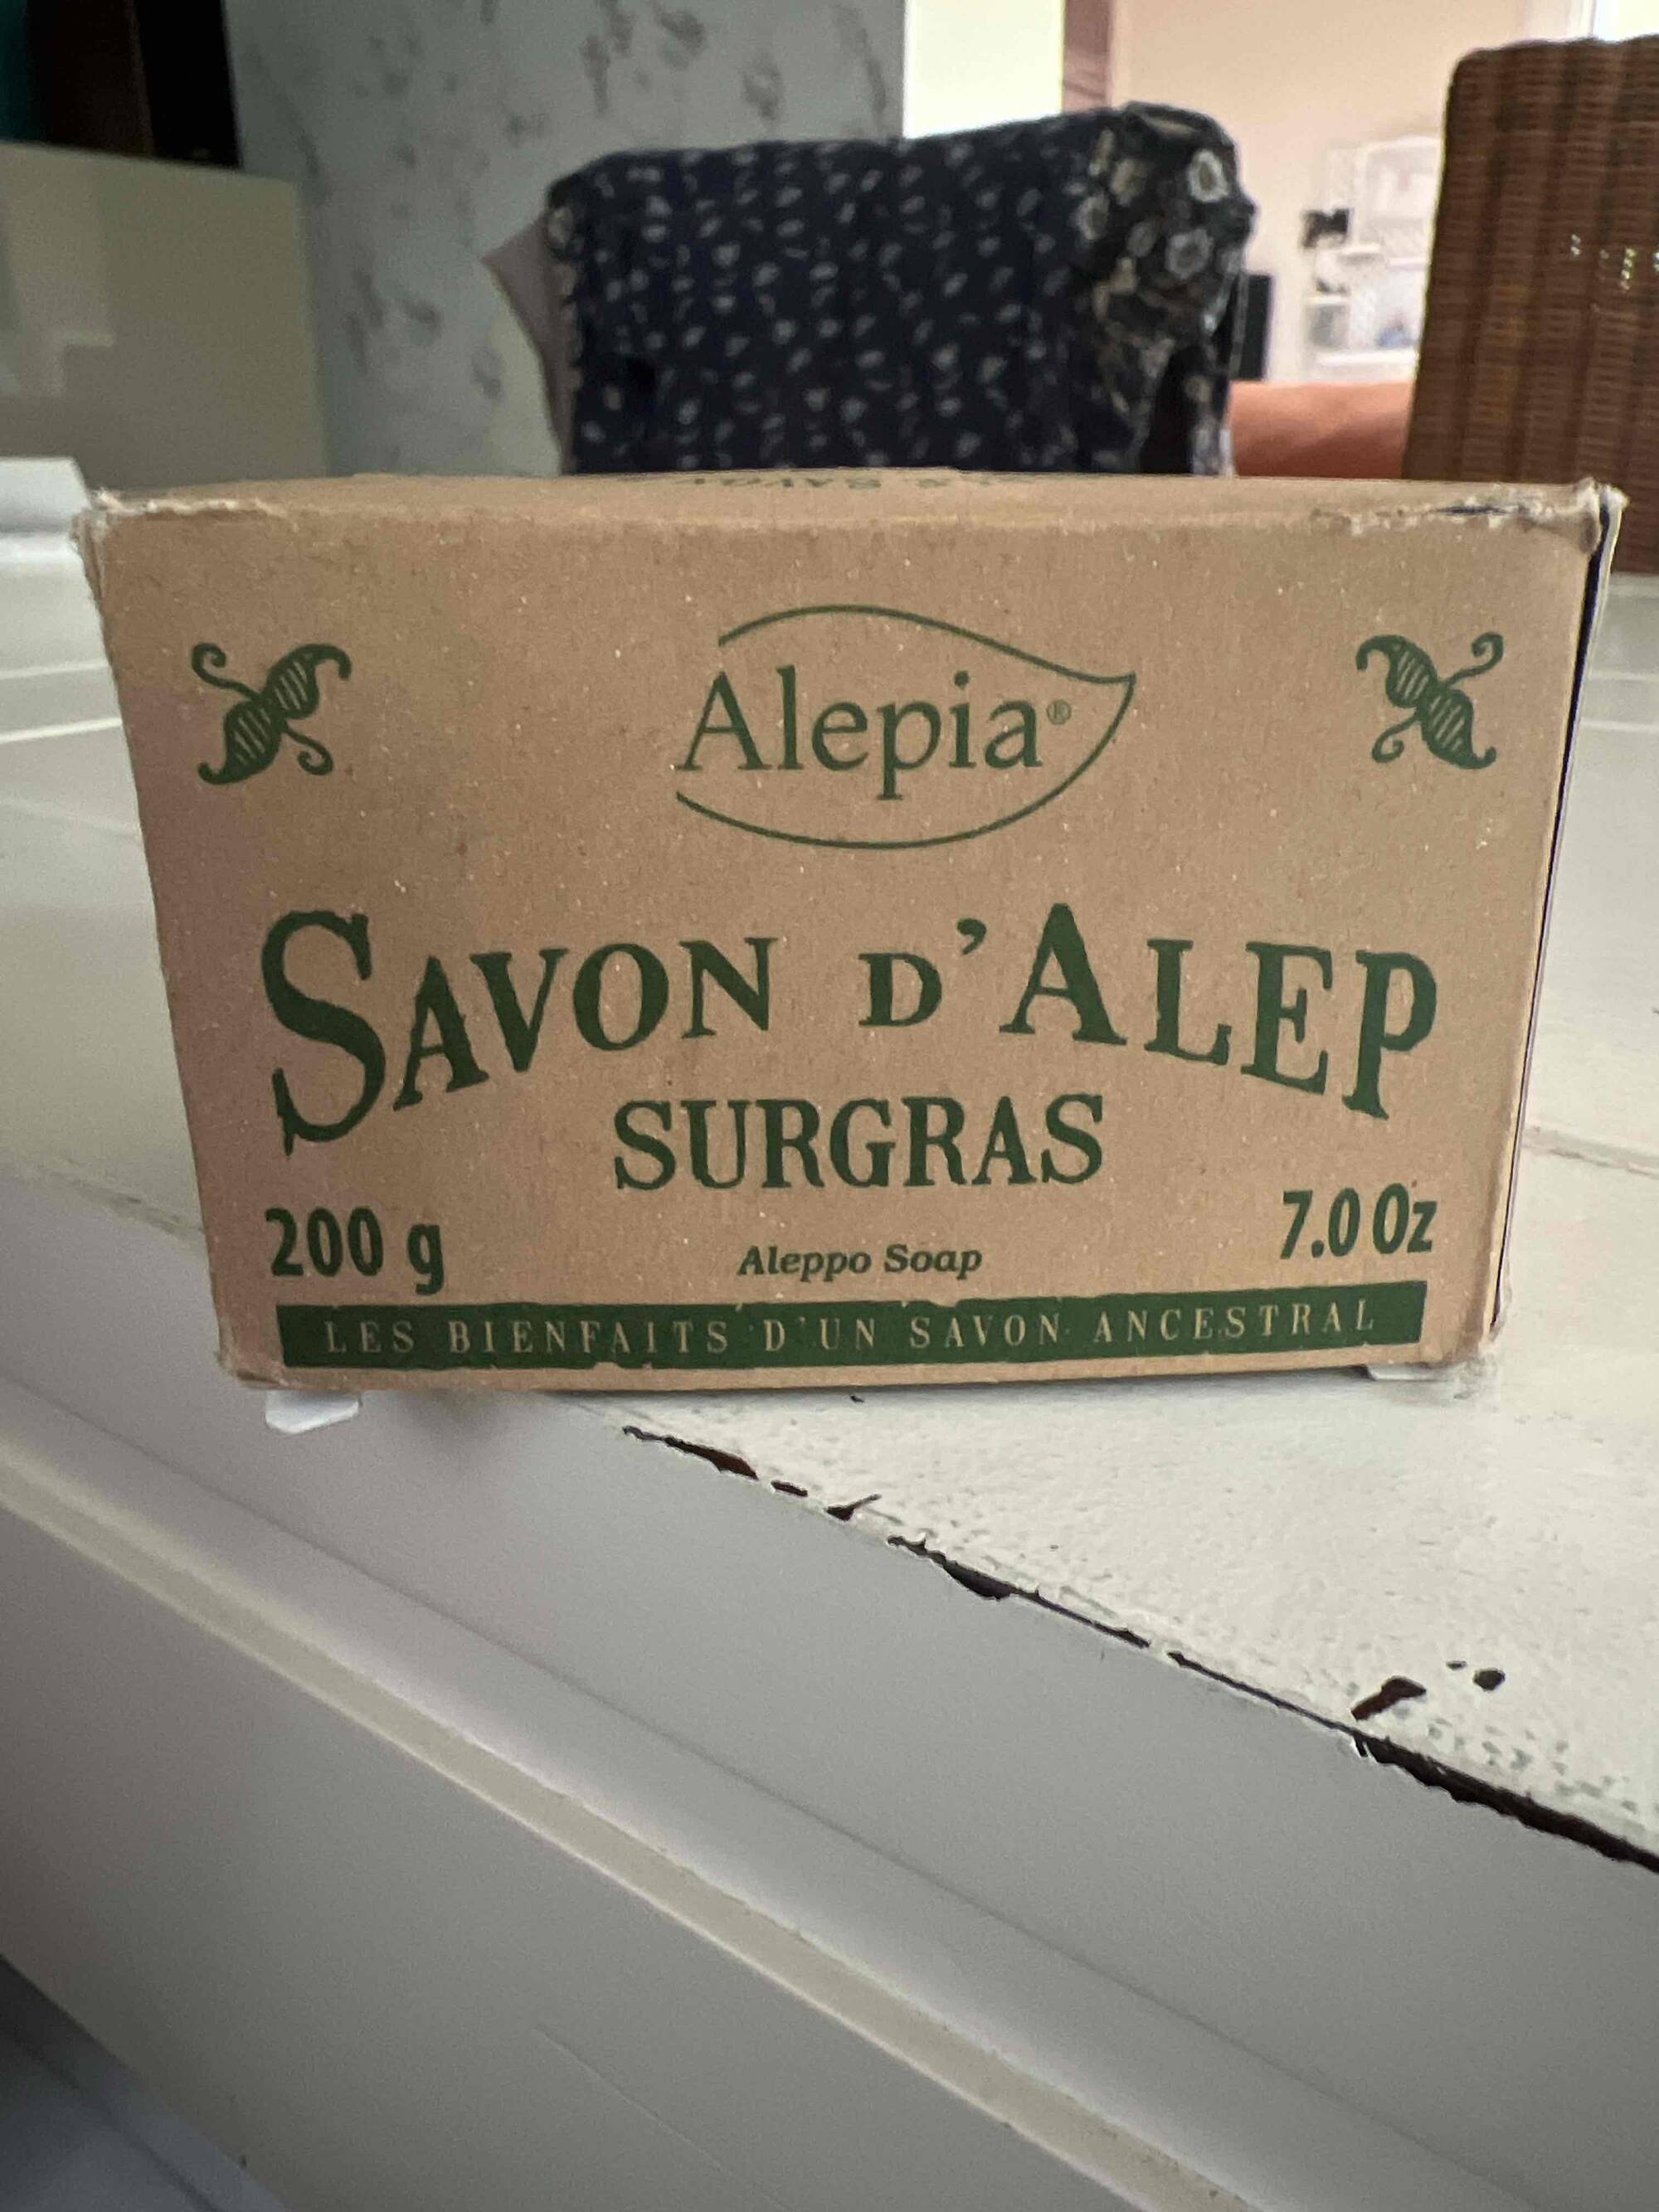 ALEPIA - Savon d’Alep surgras